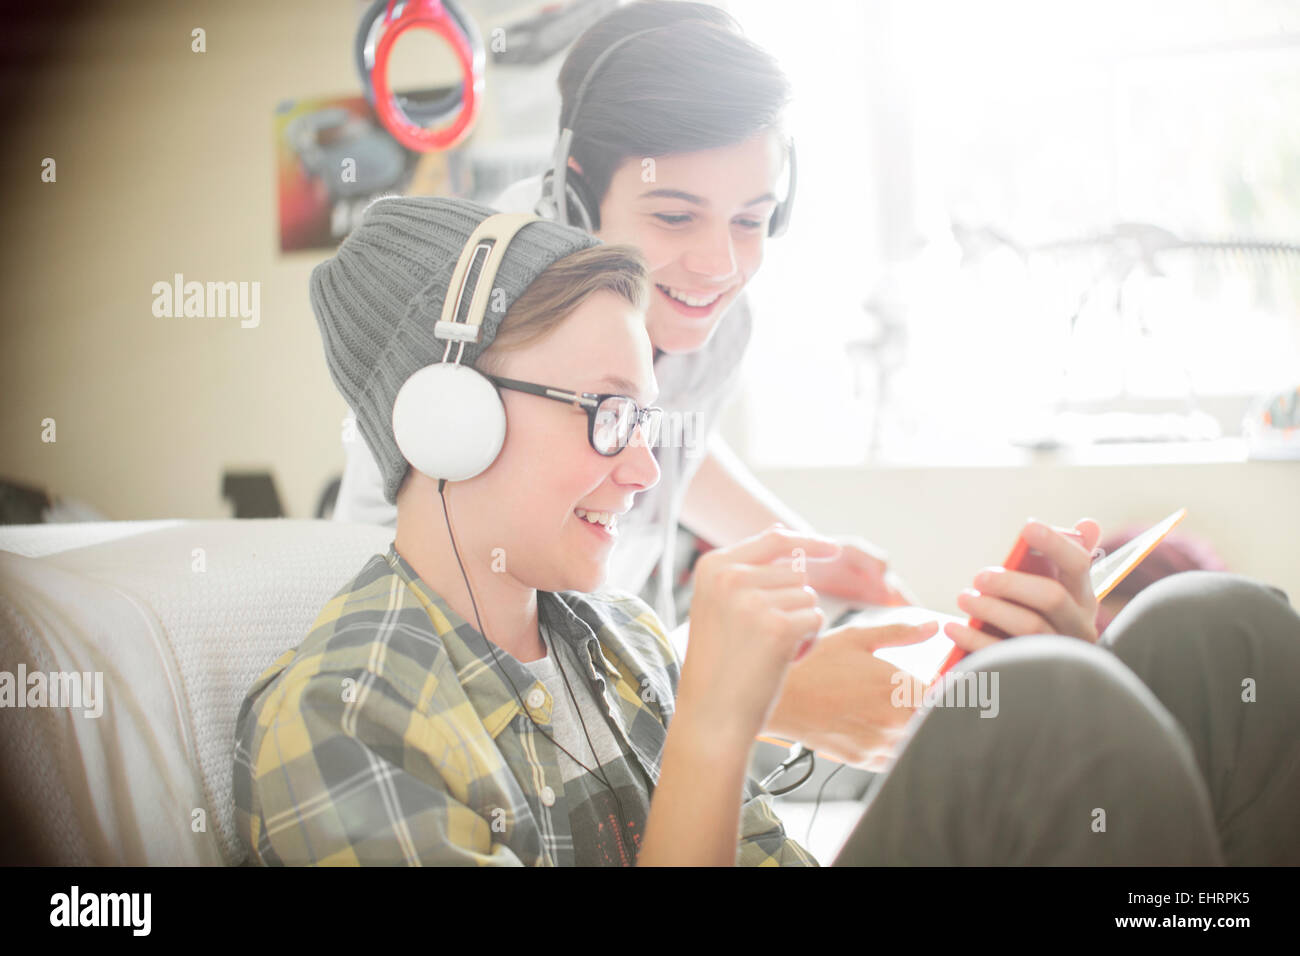 Two teenage boys listening to music on headphones Stock Photo